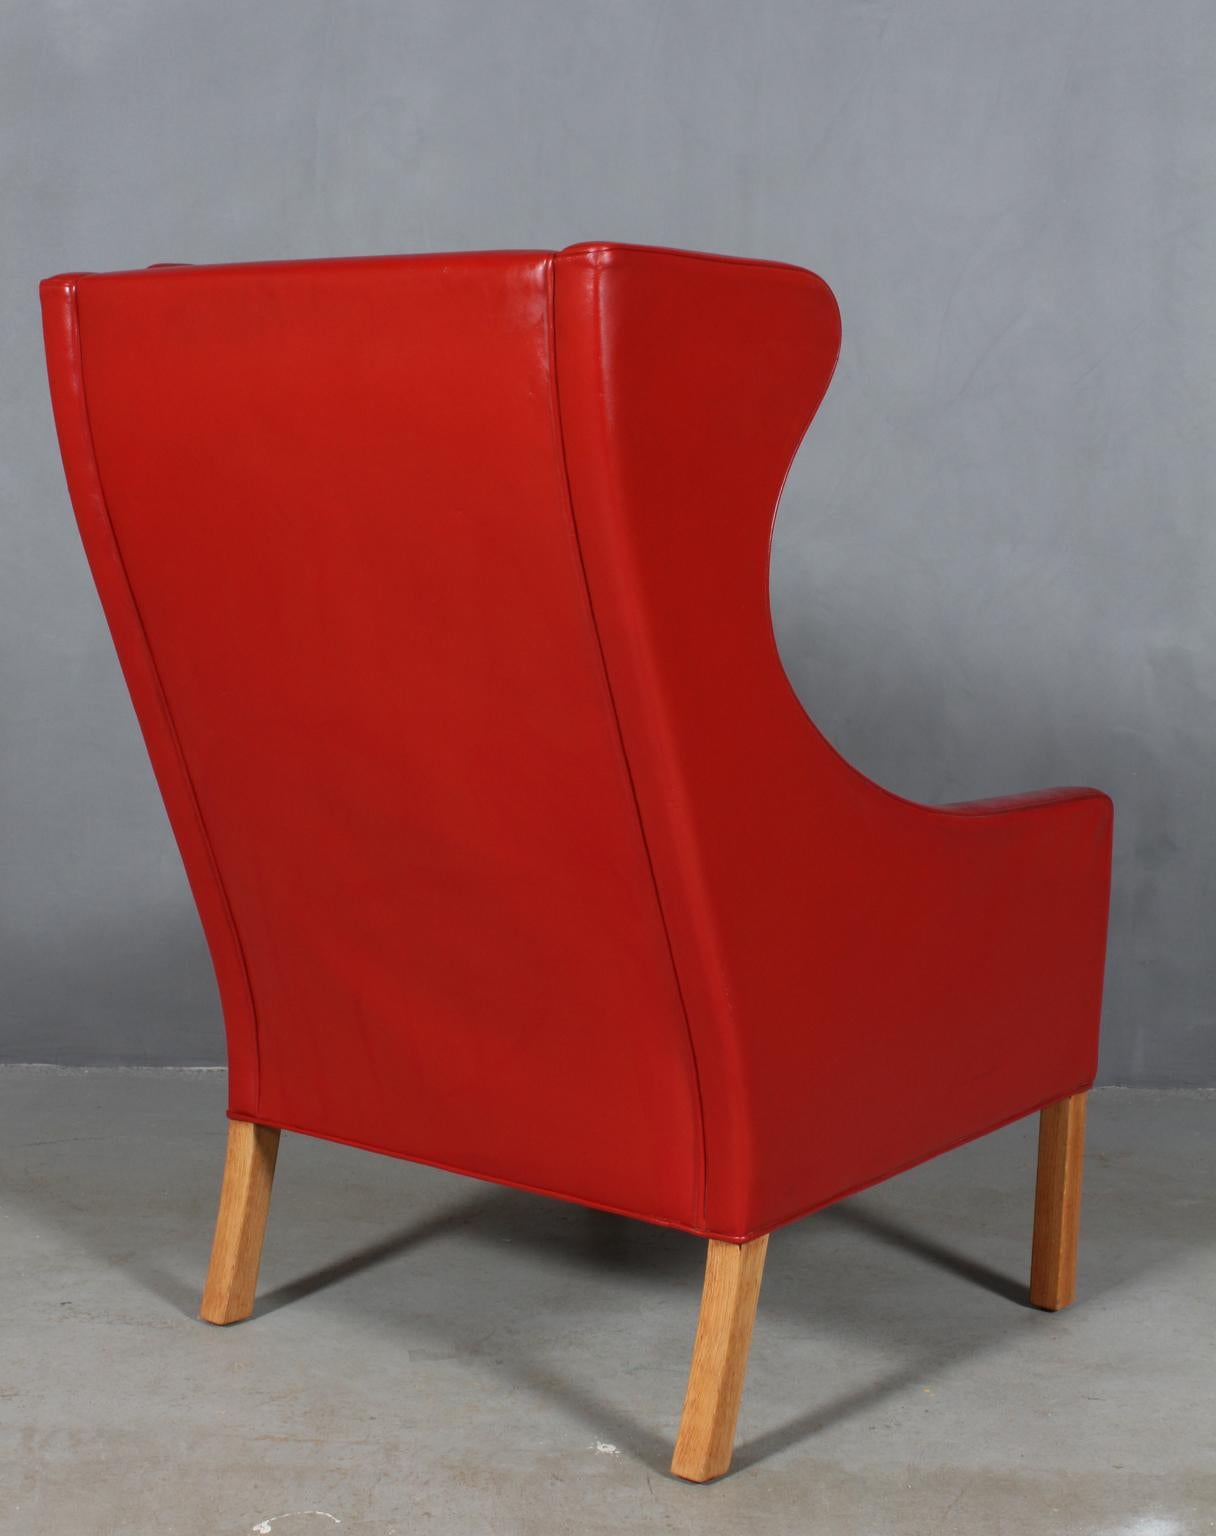 Scandinavian Modern Børge Mogensen Wingback Chair in Original Red Leather, Model 2204